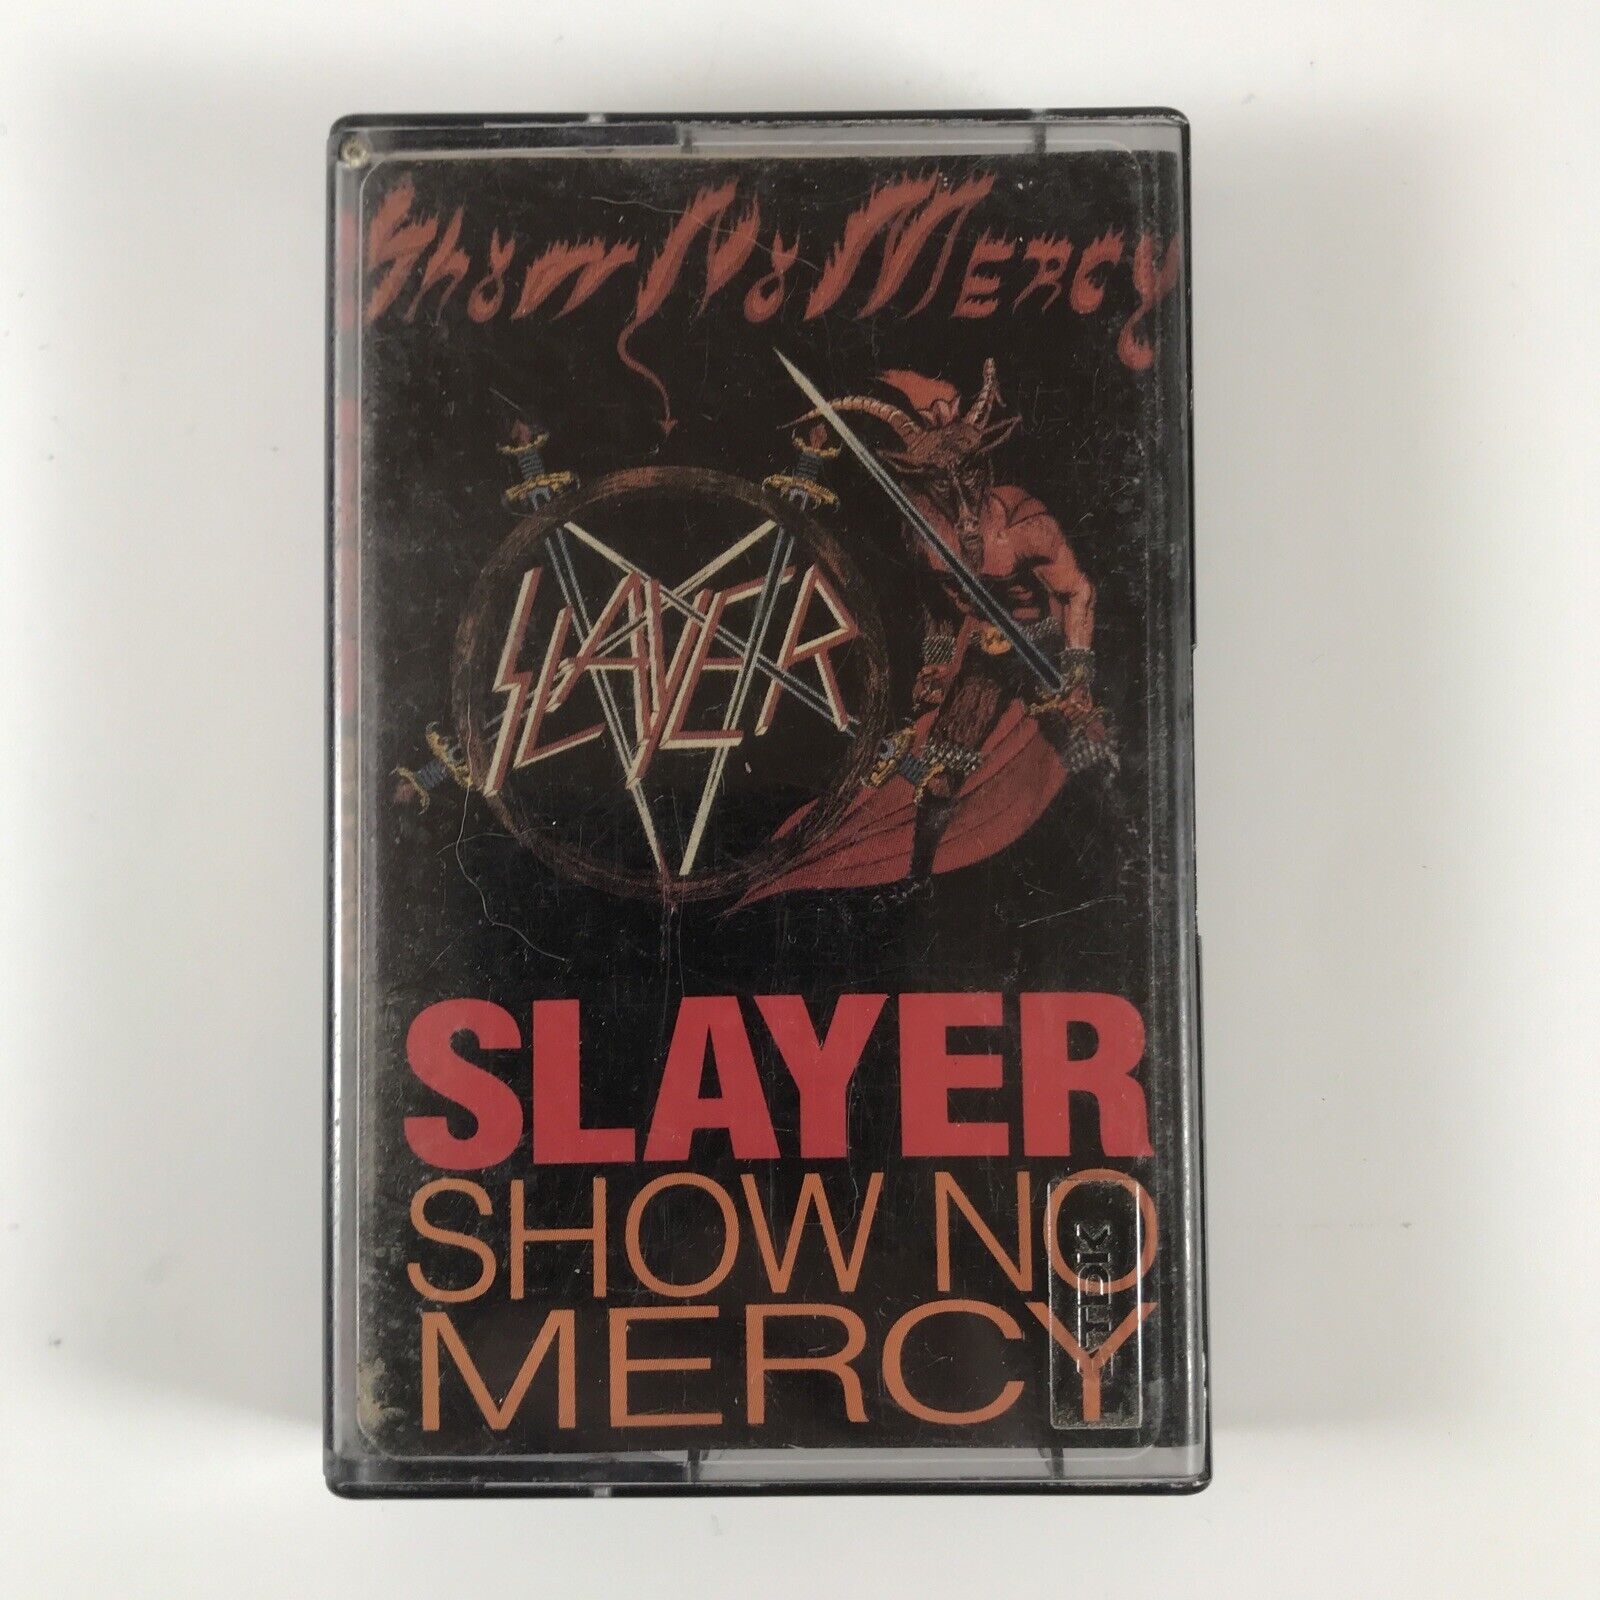 SLAYER Show No Mercy Cassette Tape 1983 Vintage Tested Restless Records Cobalt